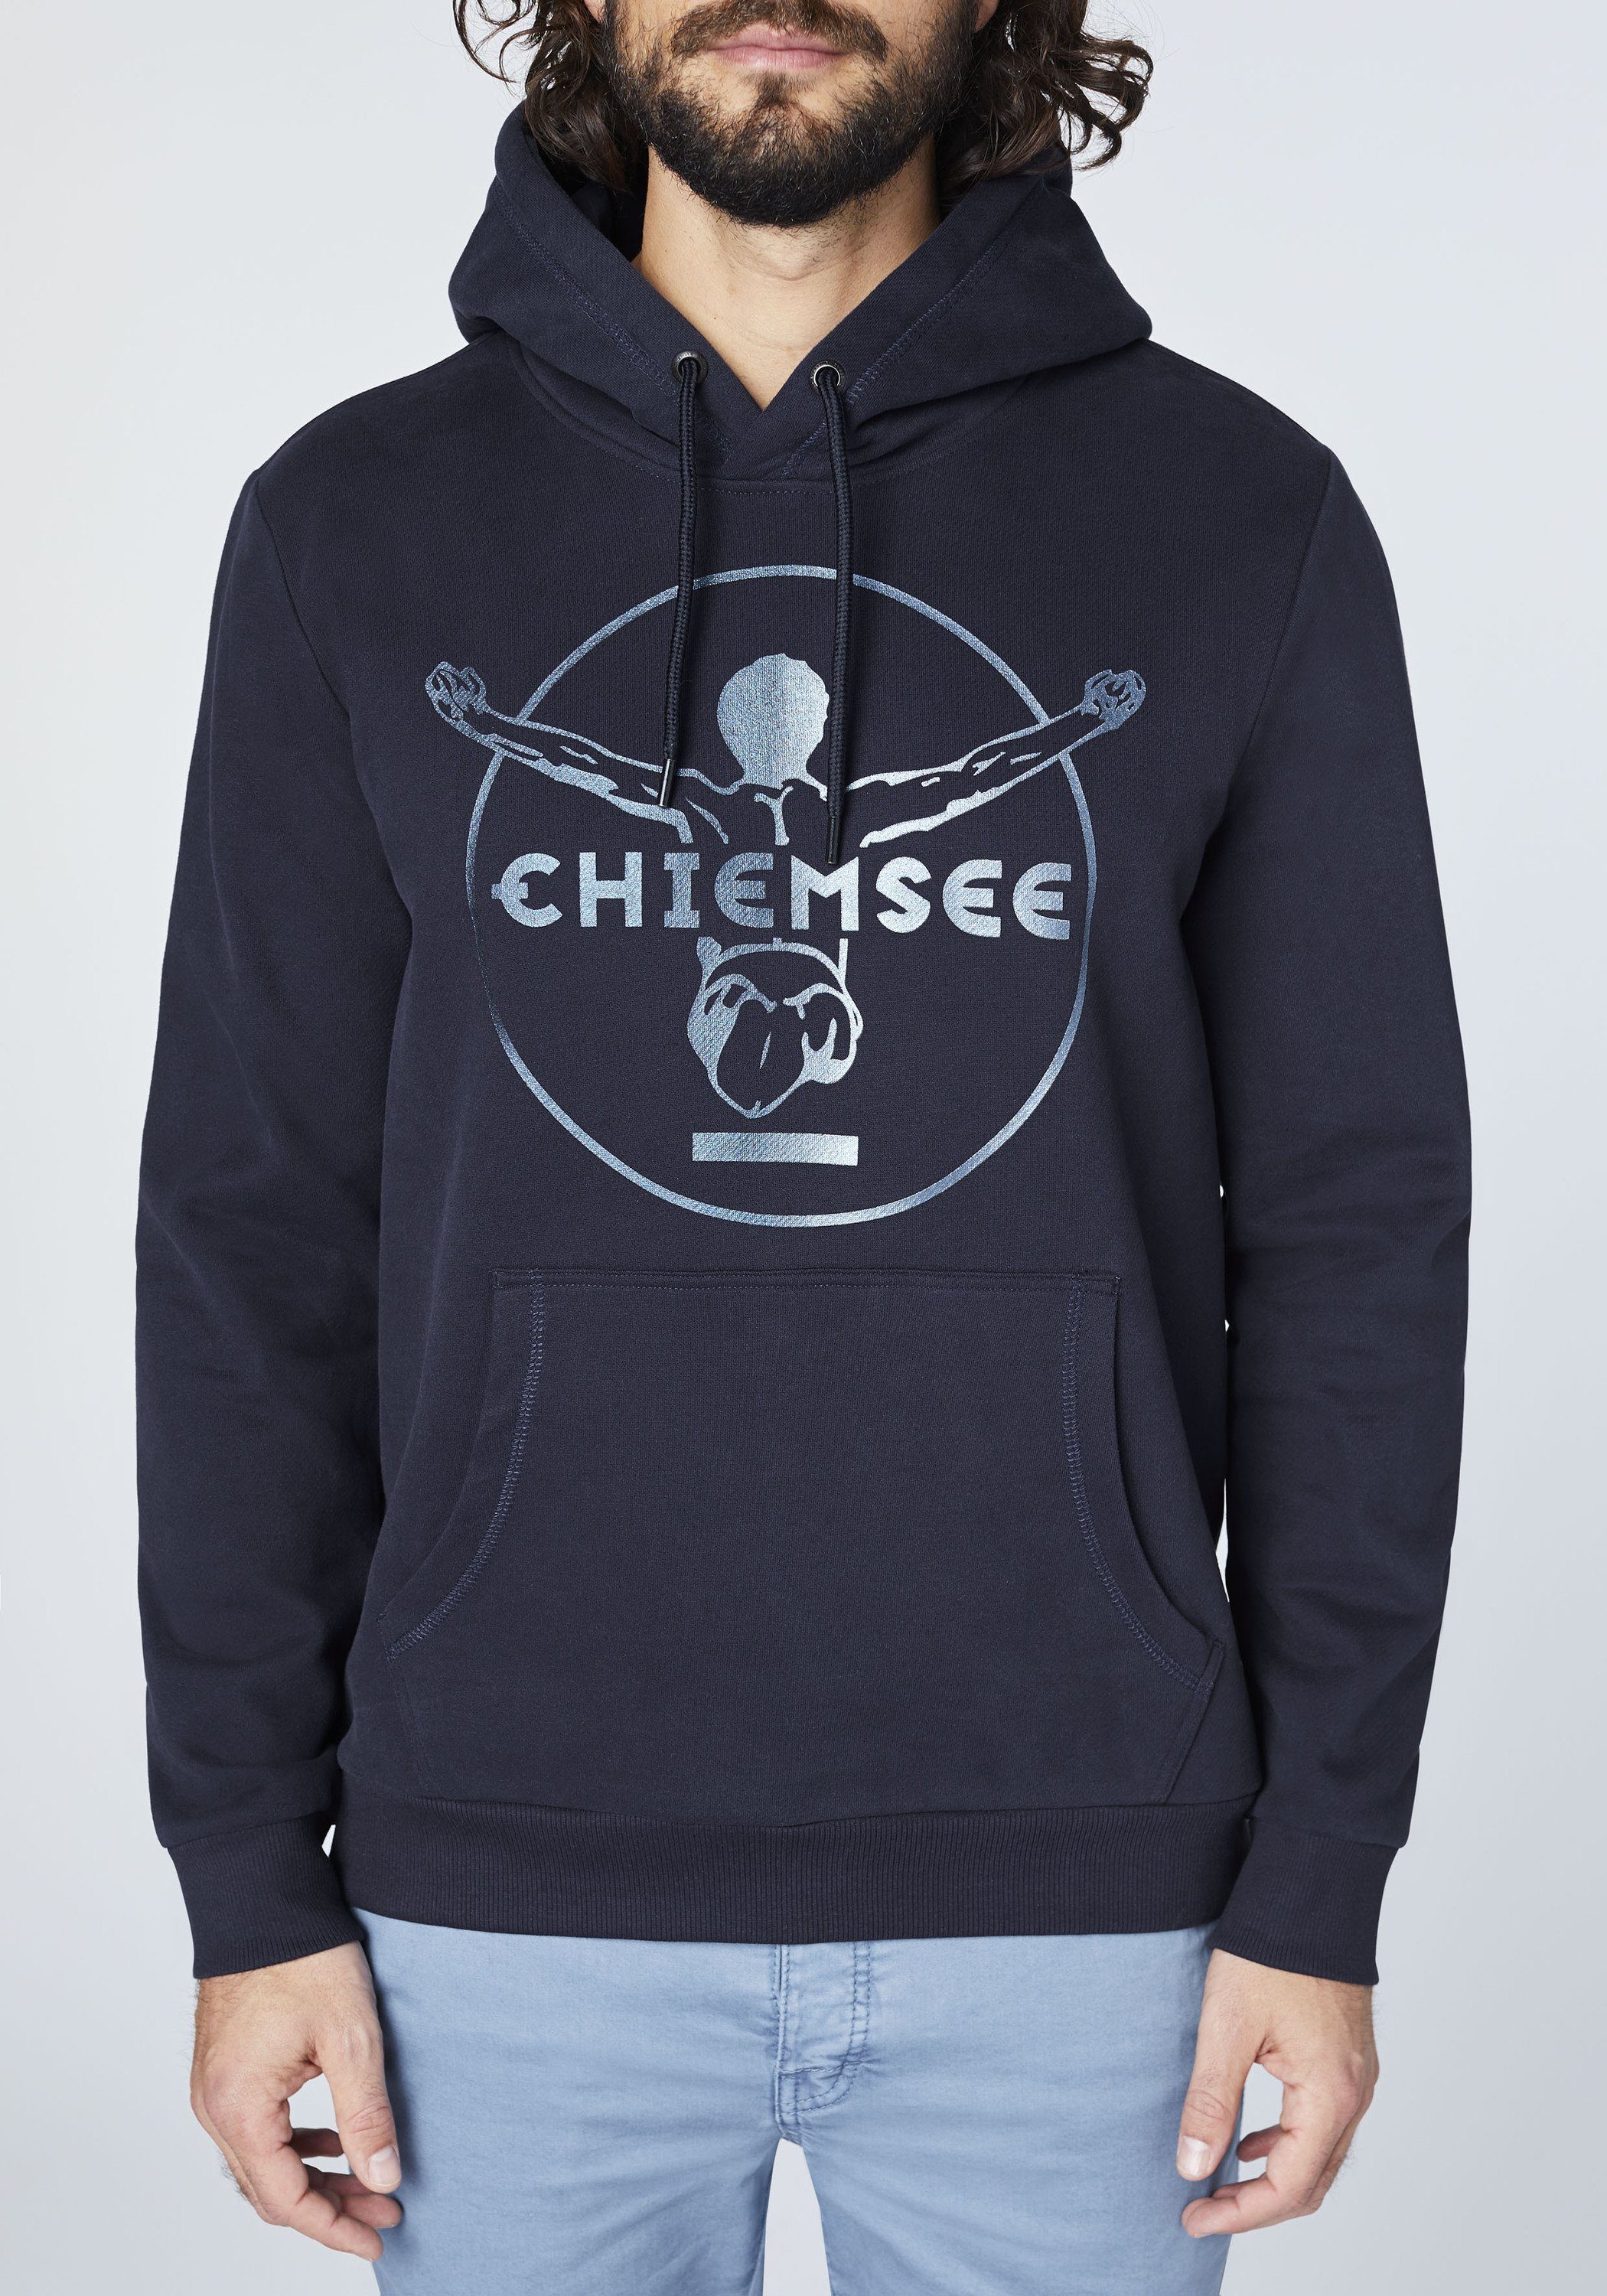 Chiemsee dunkel mit 1 Hoodie Kapuzensweatshirt blau Jumper-Motiv